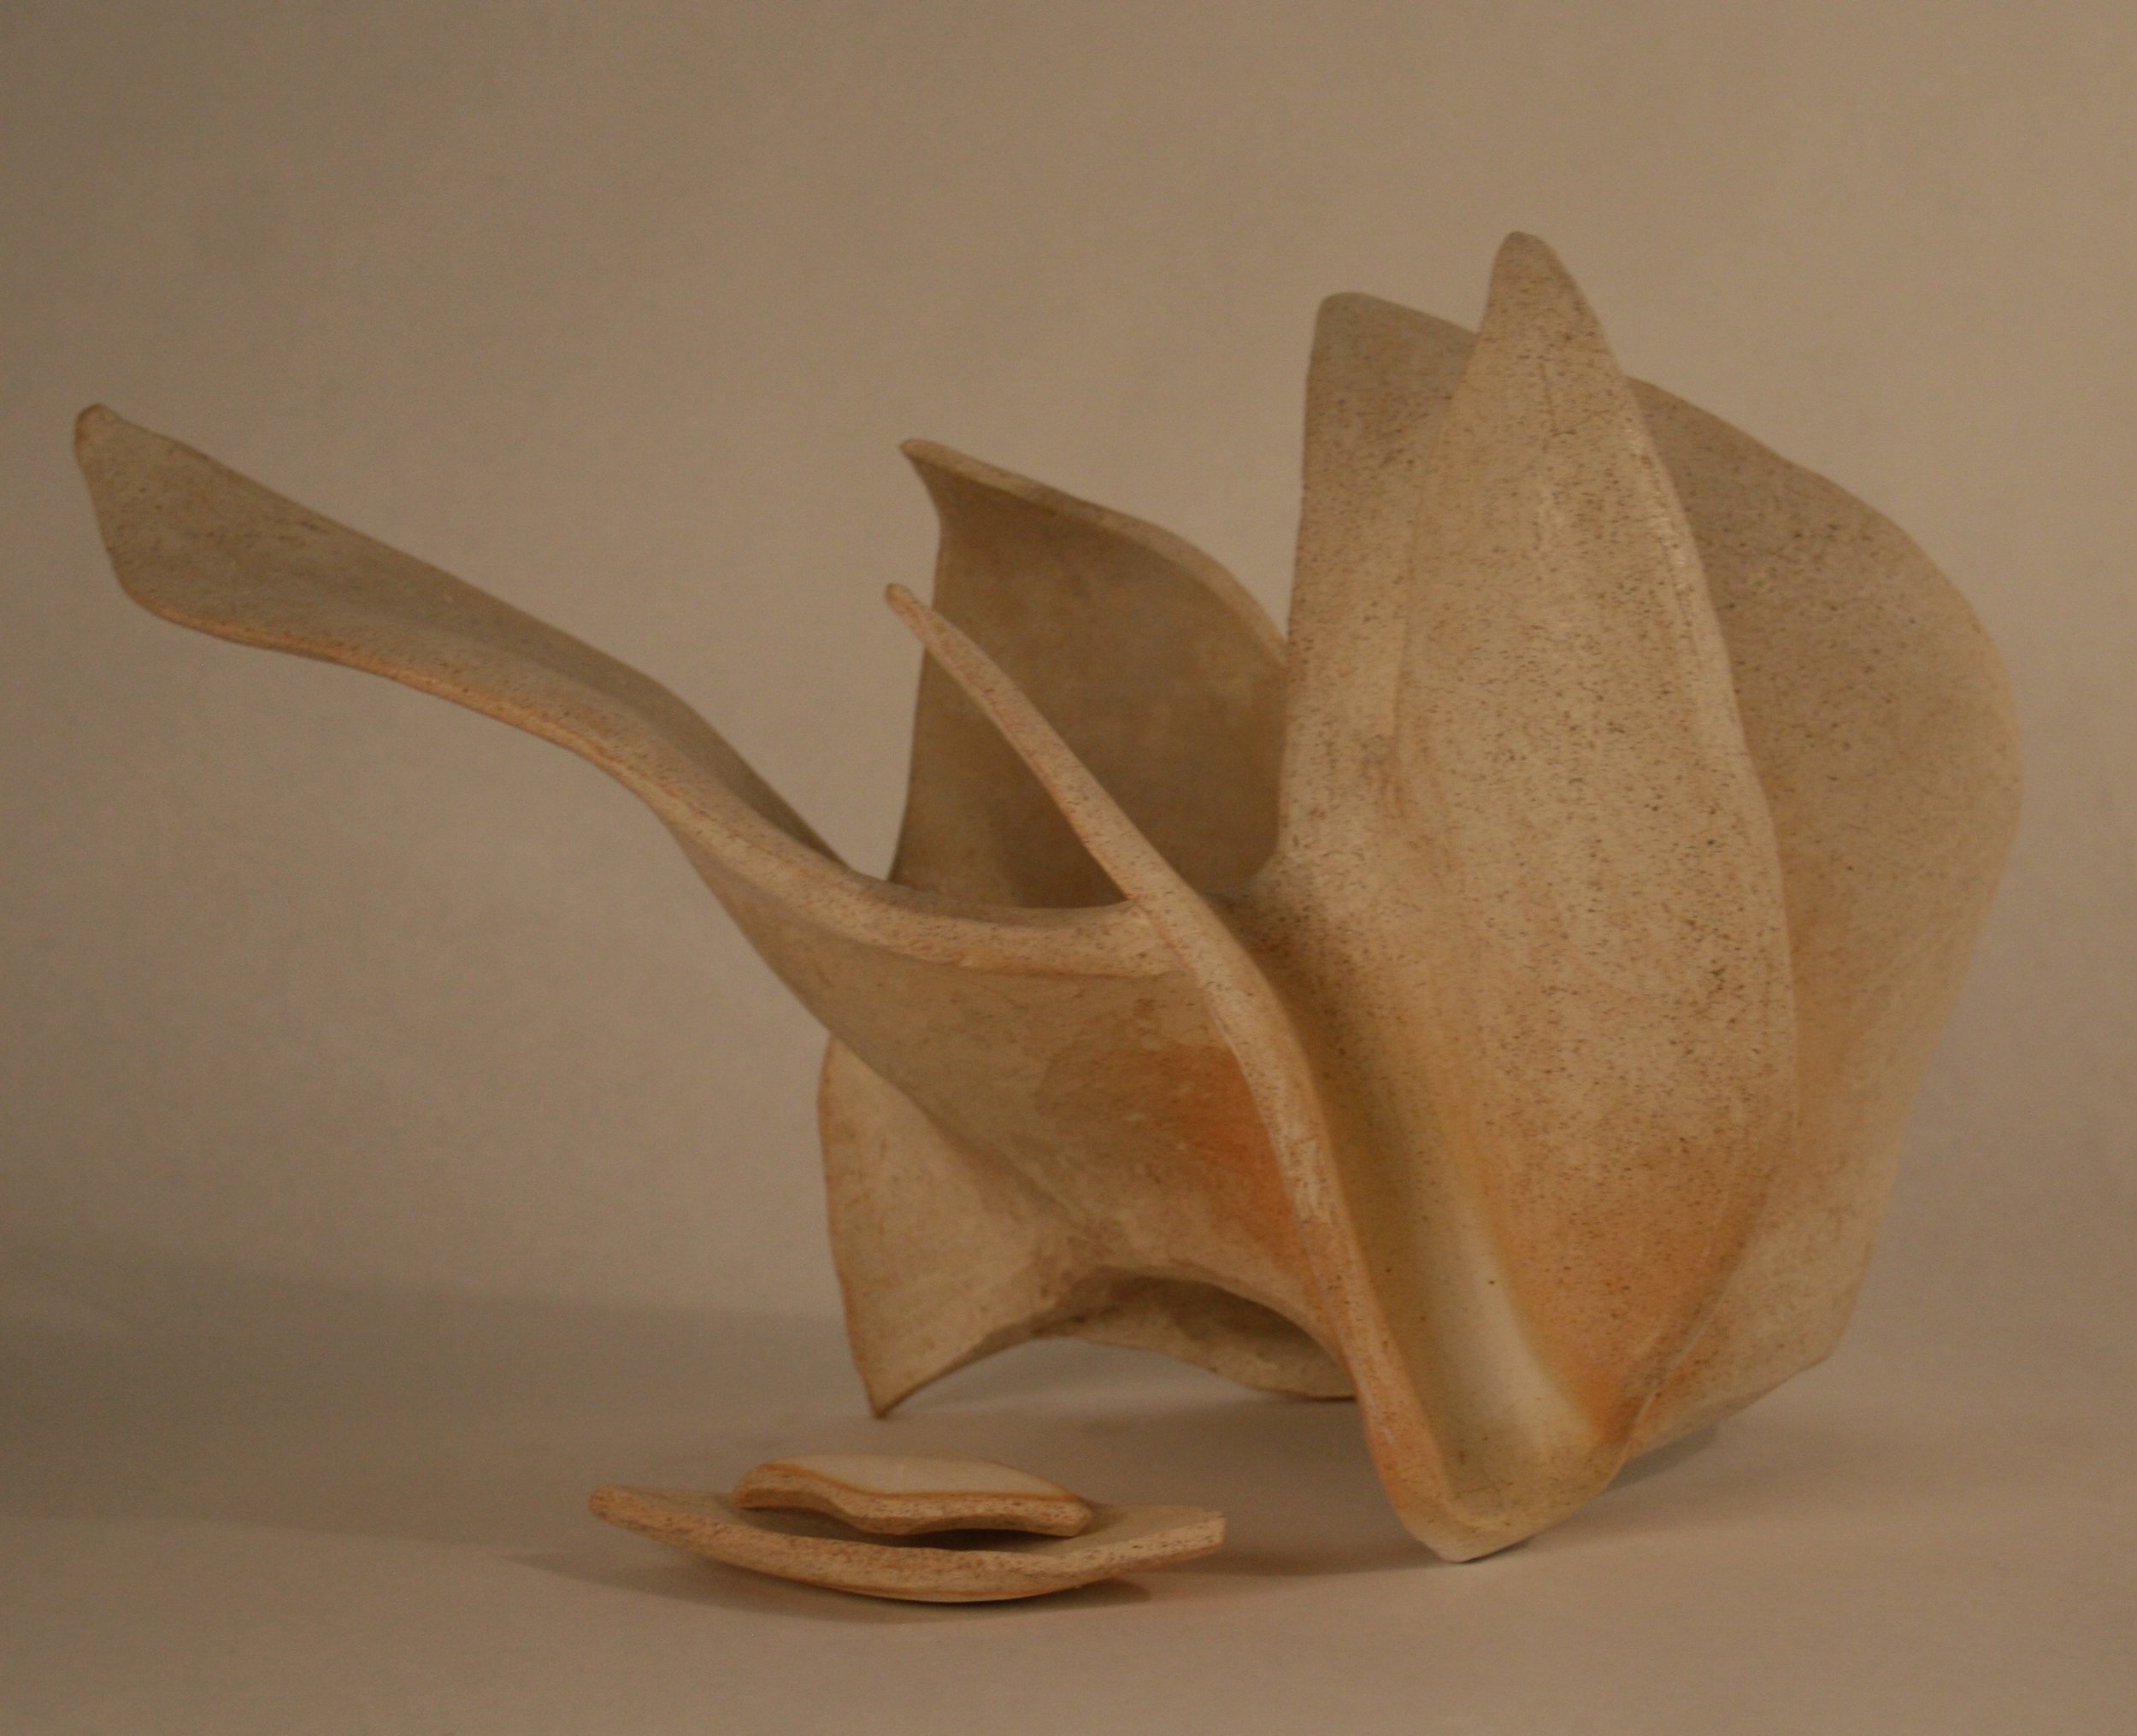 'Lean', MM, salt fired stone ware, Portland, OR, 2012